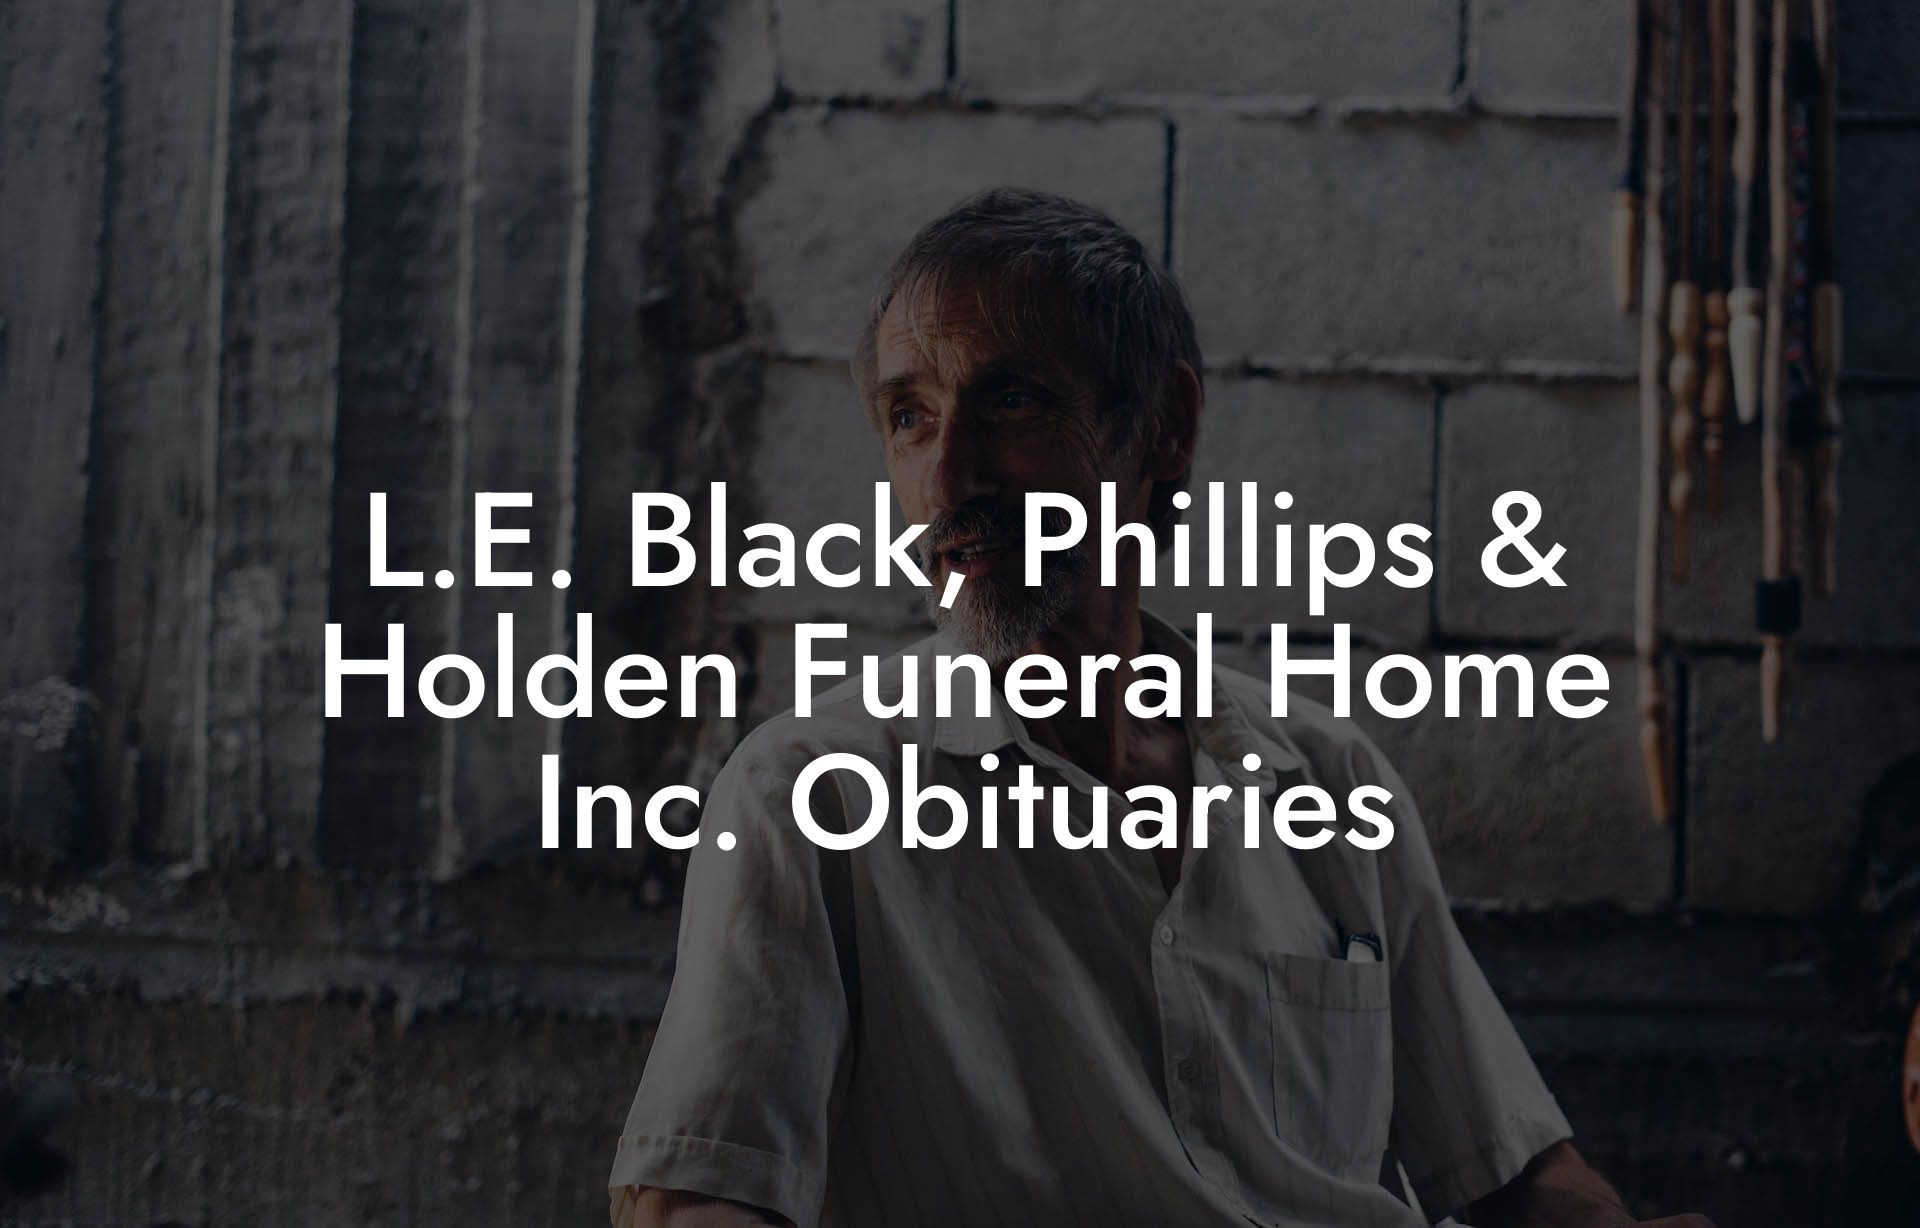 L.E. Black, Phillips & Holden Funeral Home Inc. Obituaries